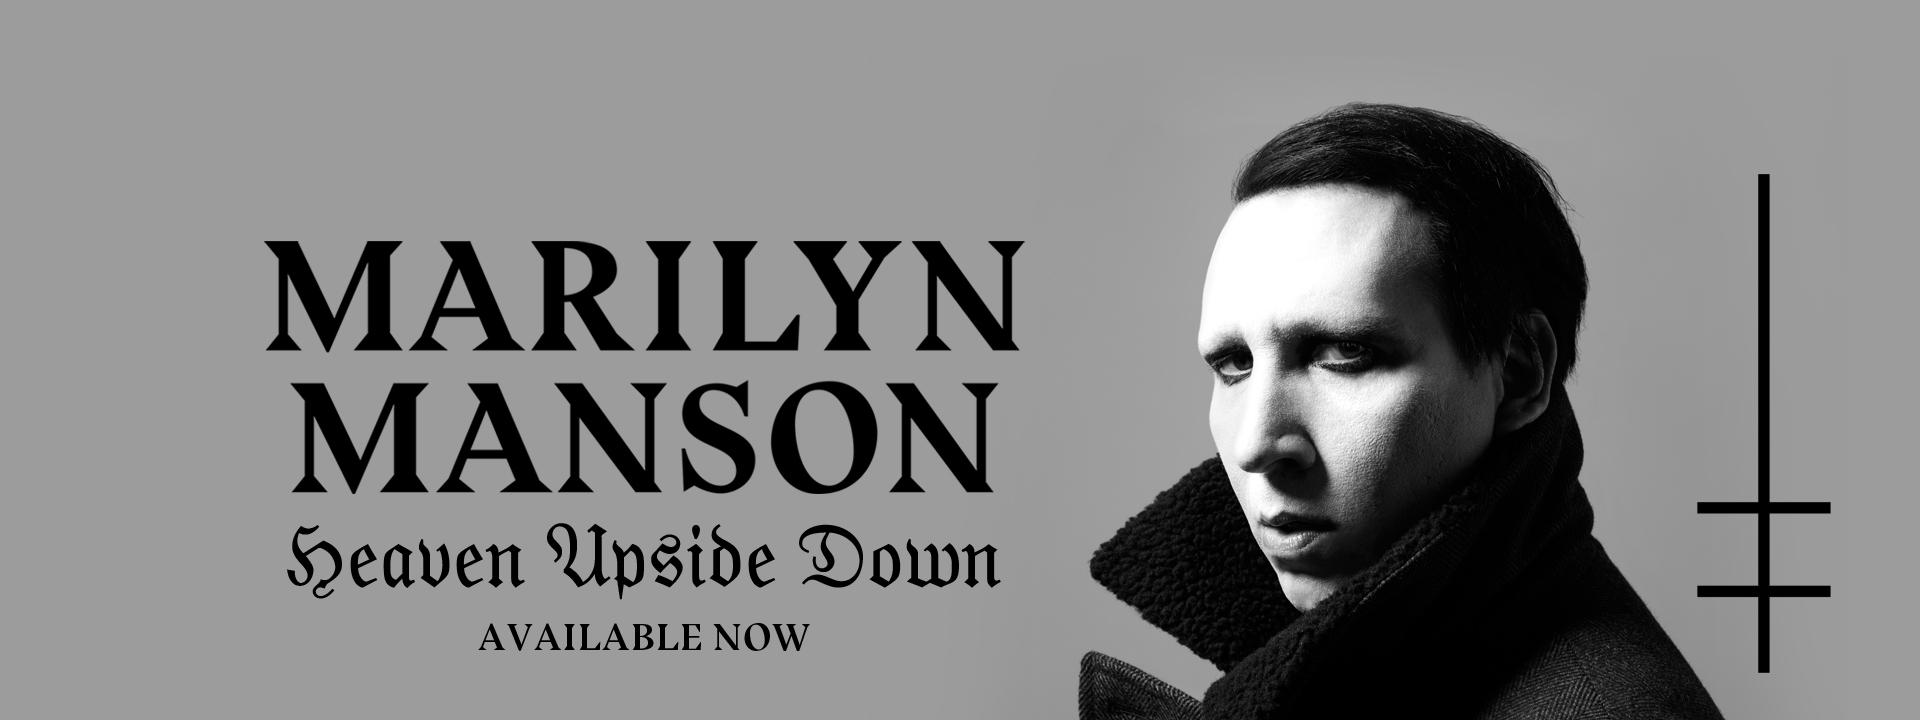 Marilyn Manson Original Logo - MARILYN MANSON